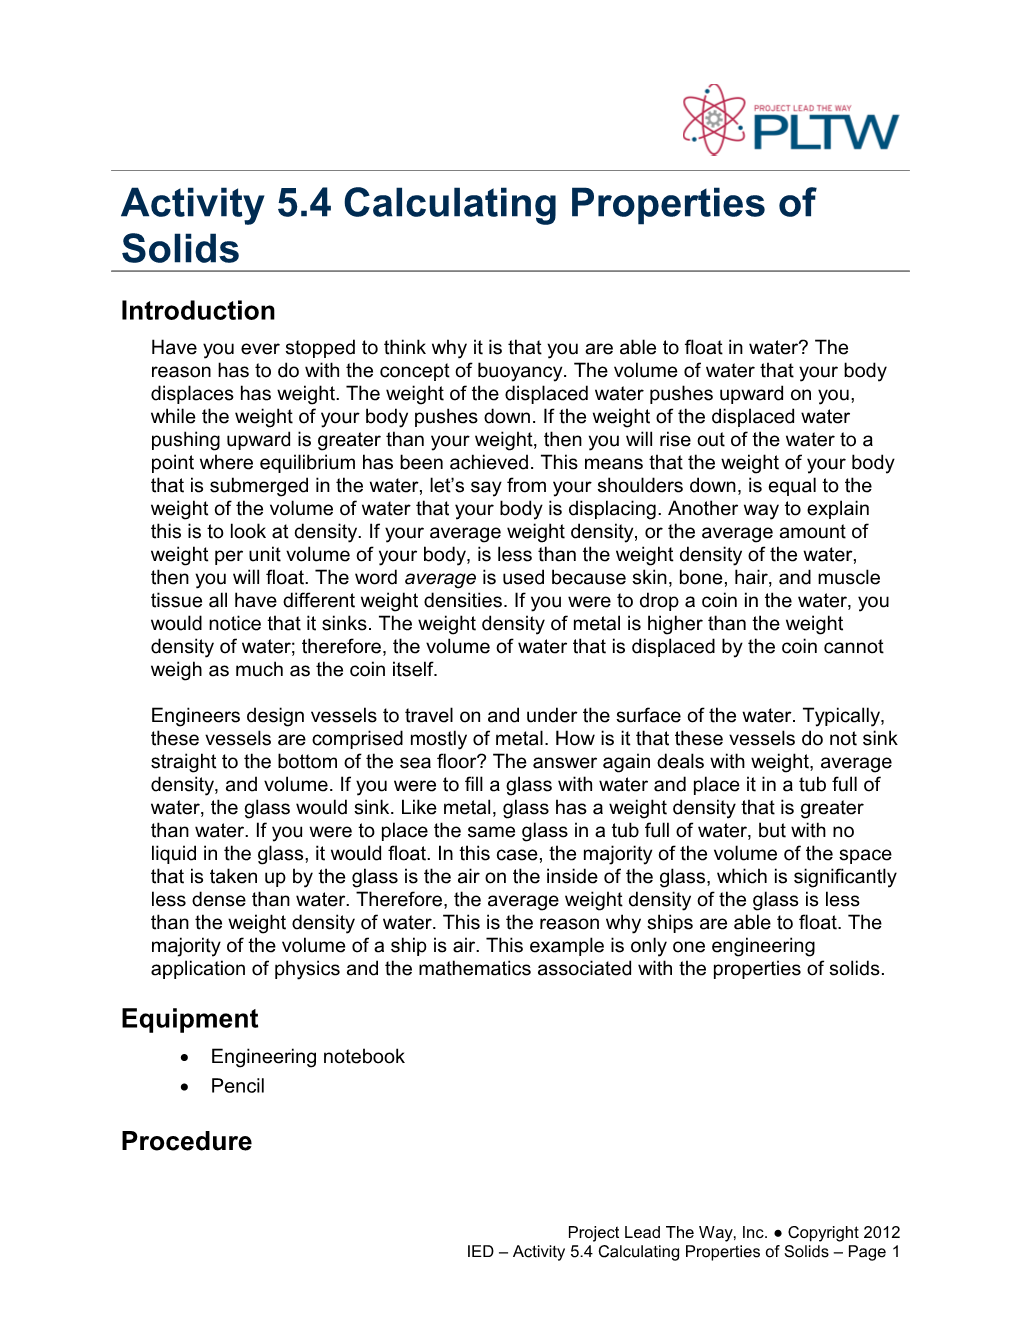 Activity 5.4 Calculating Properties of Solids